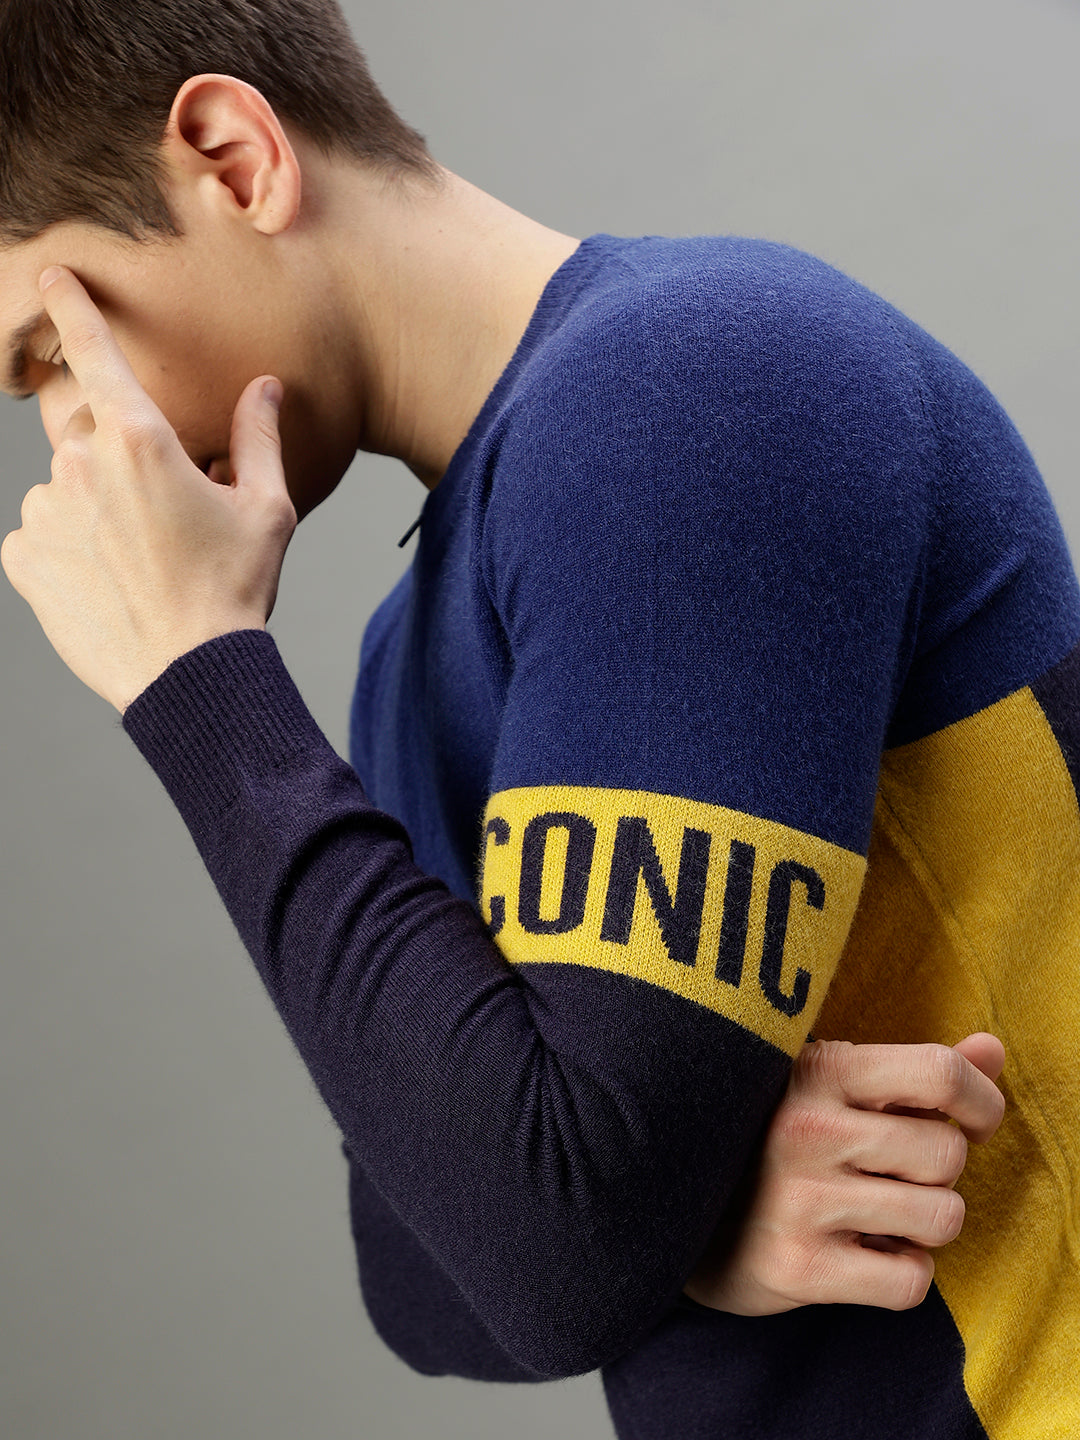 Iconic Men Colour blocked Round Neck Full Sleeves Sweater